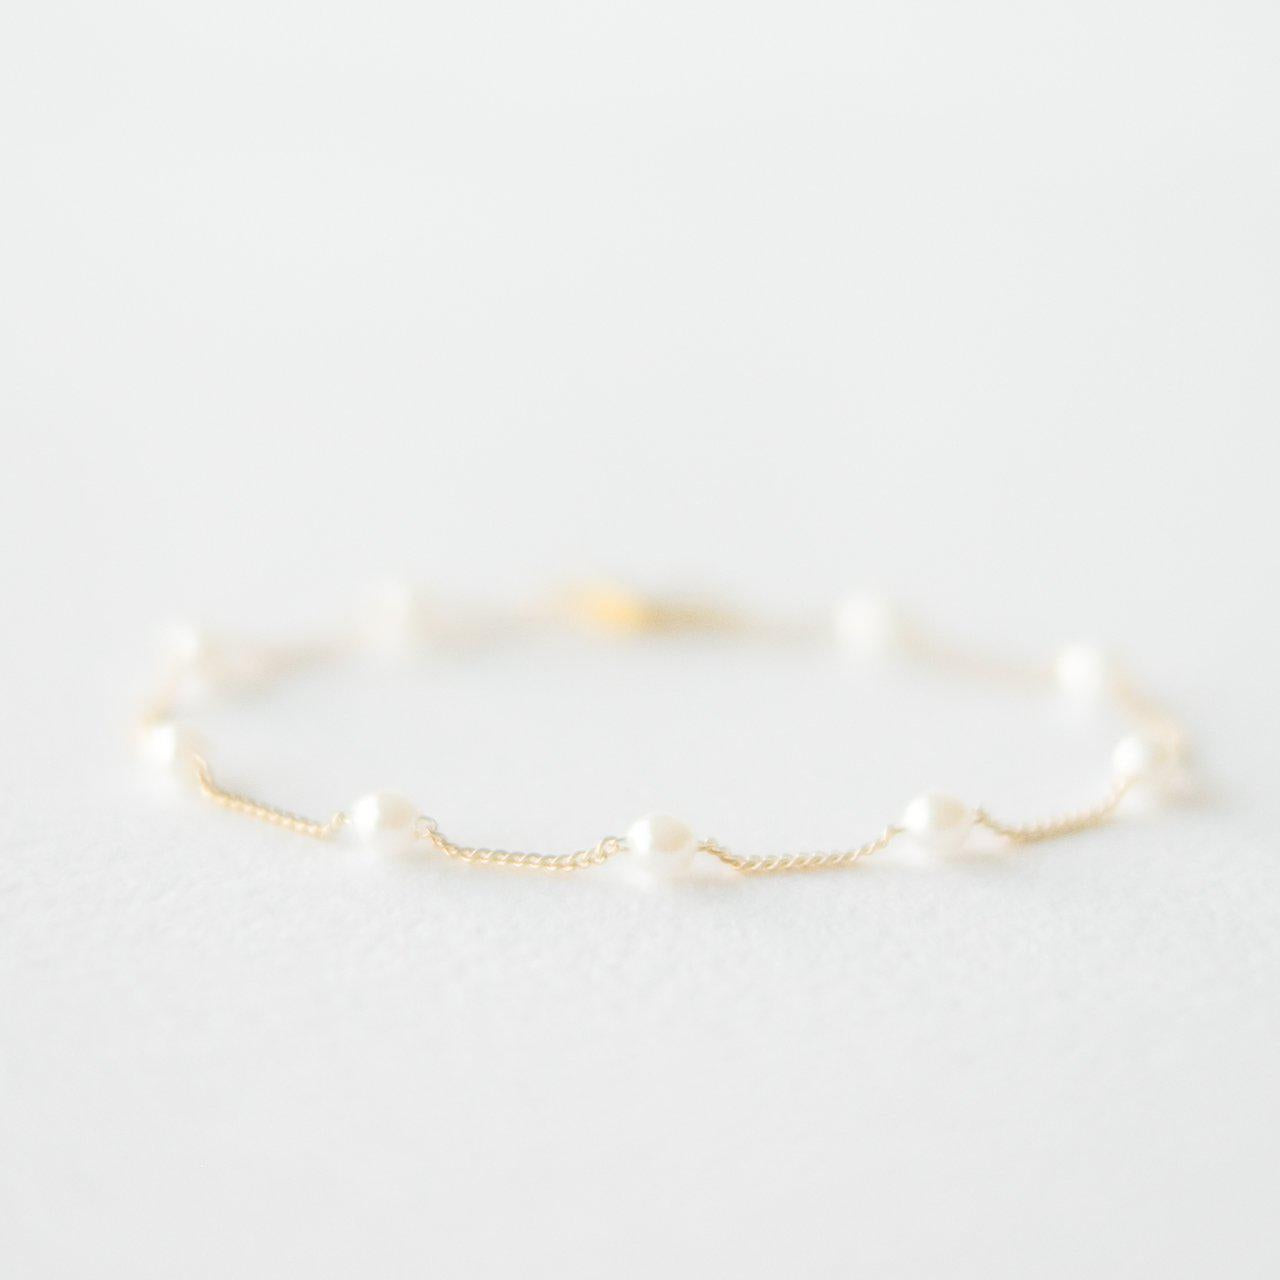 Delicate gold pearl bracelet